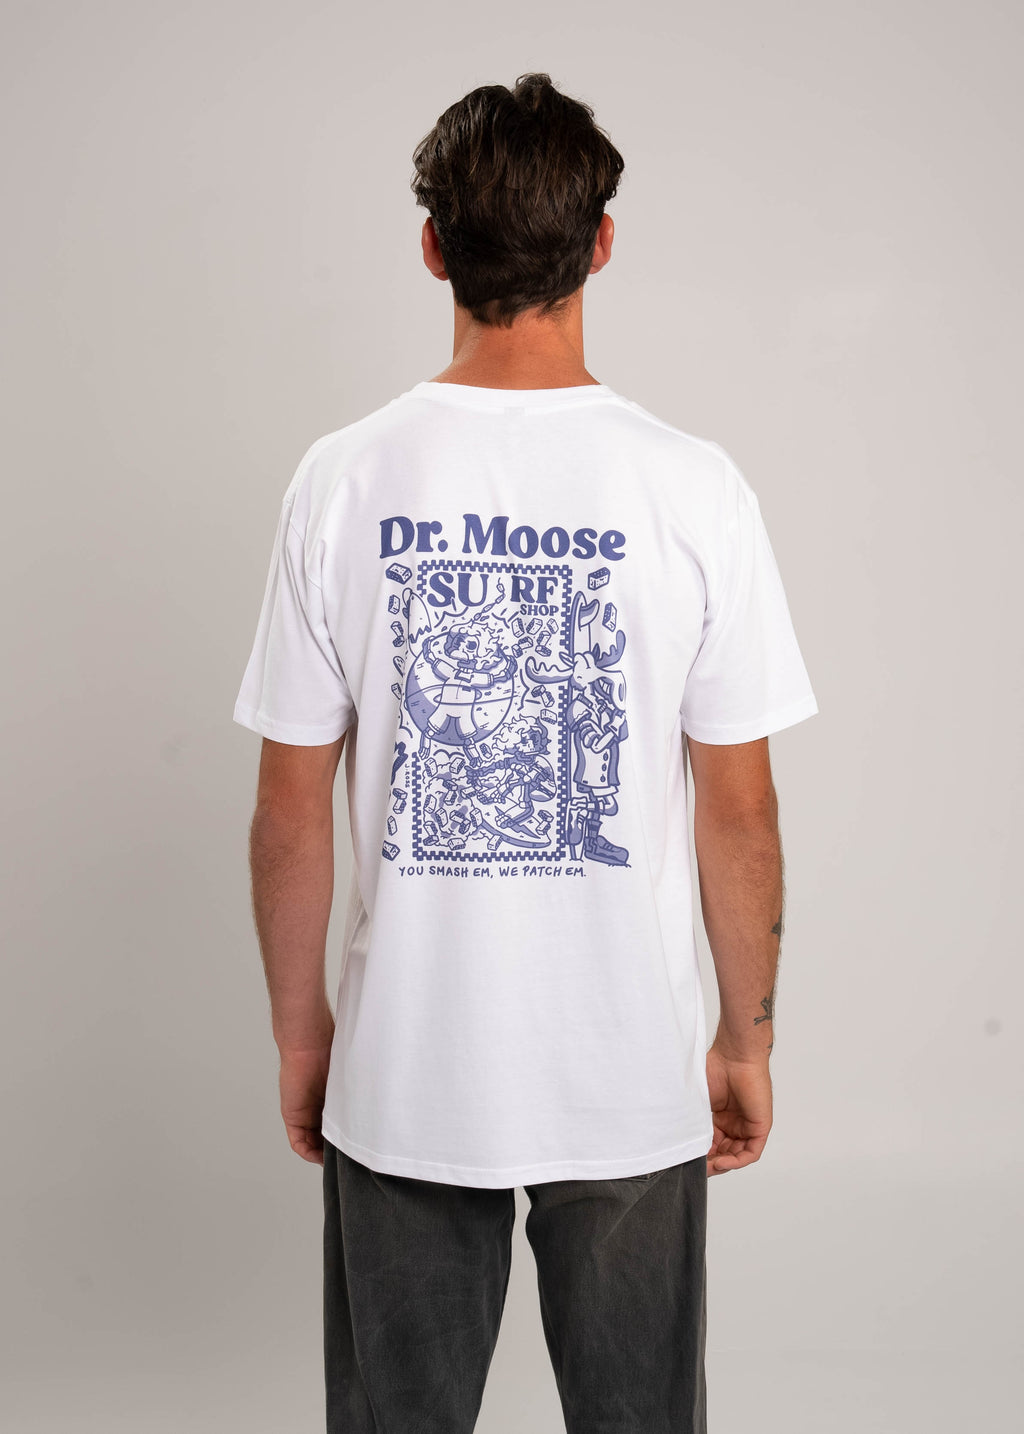 Dr.Moose Byron Bay Jake Ross Surf T-Shirt